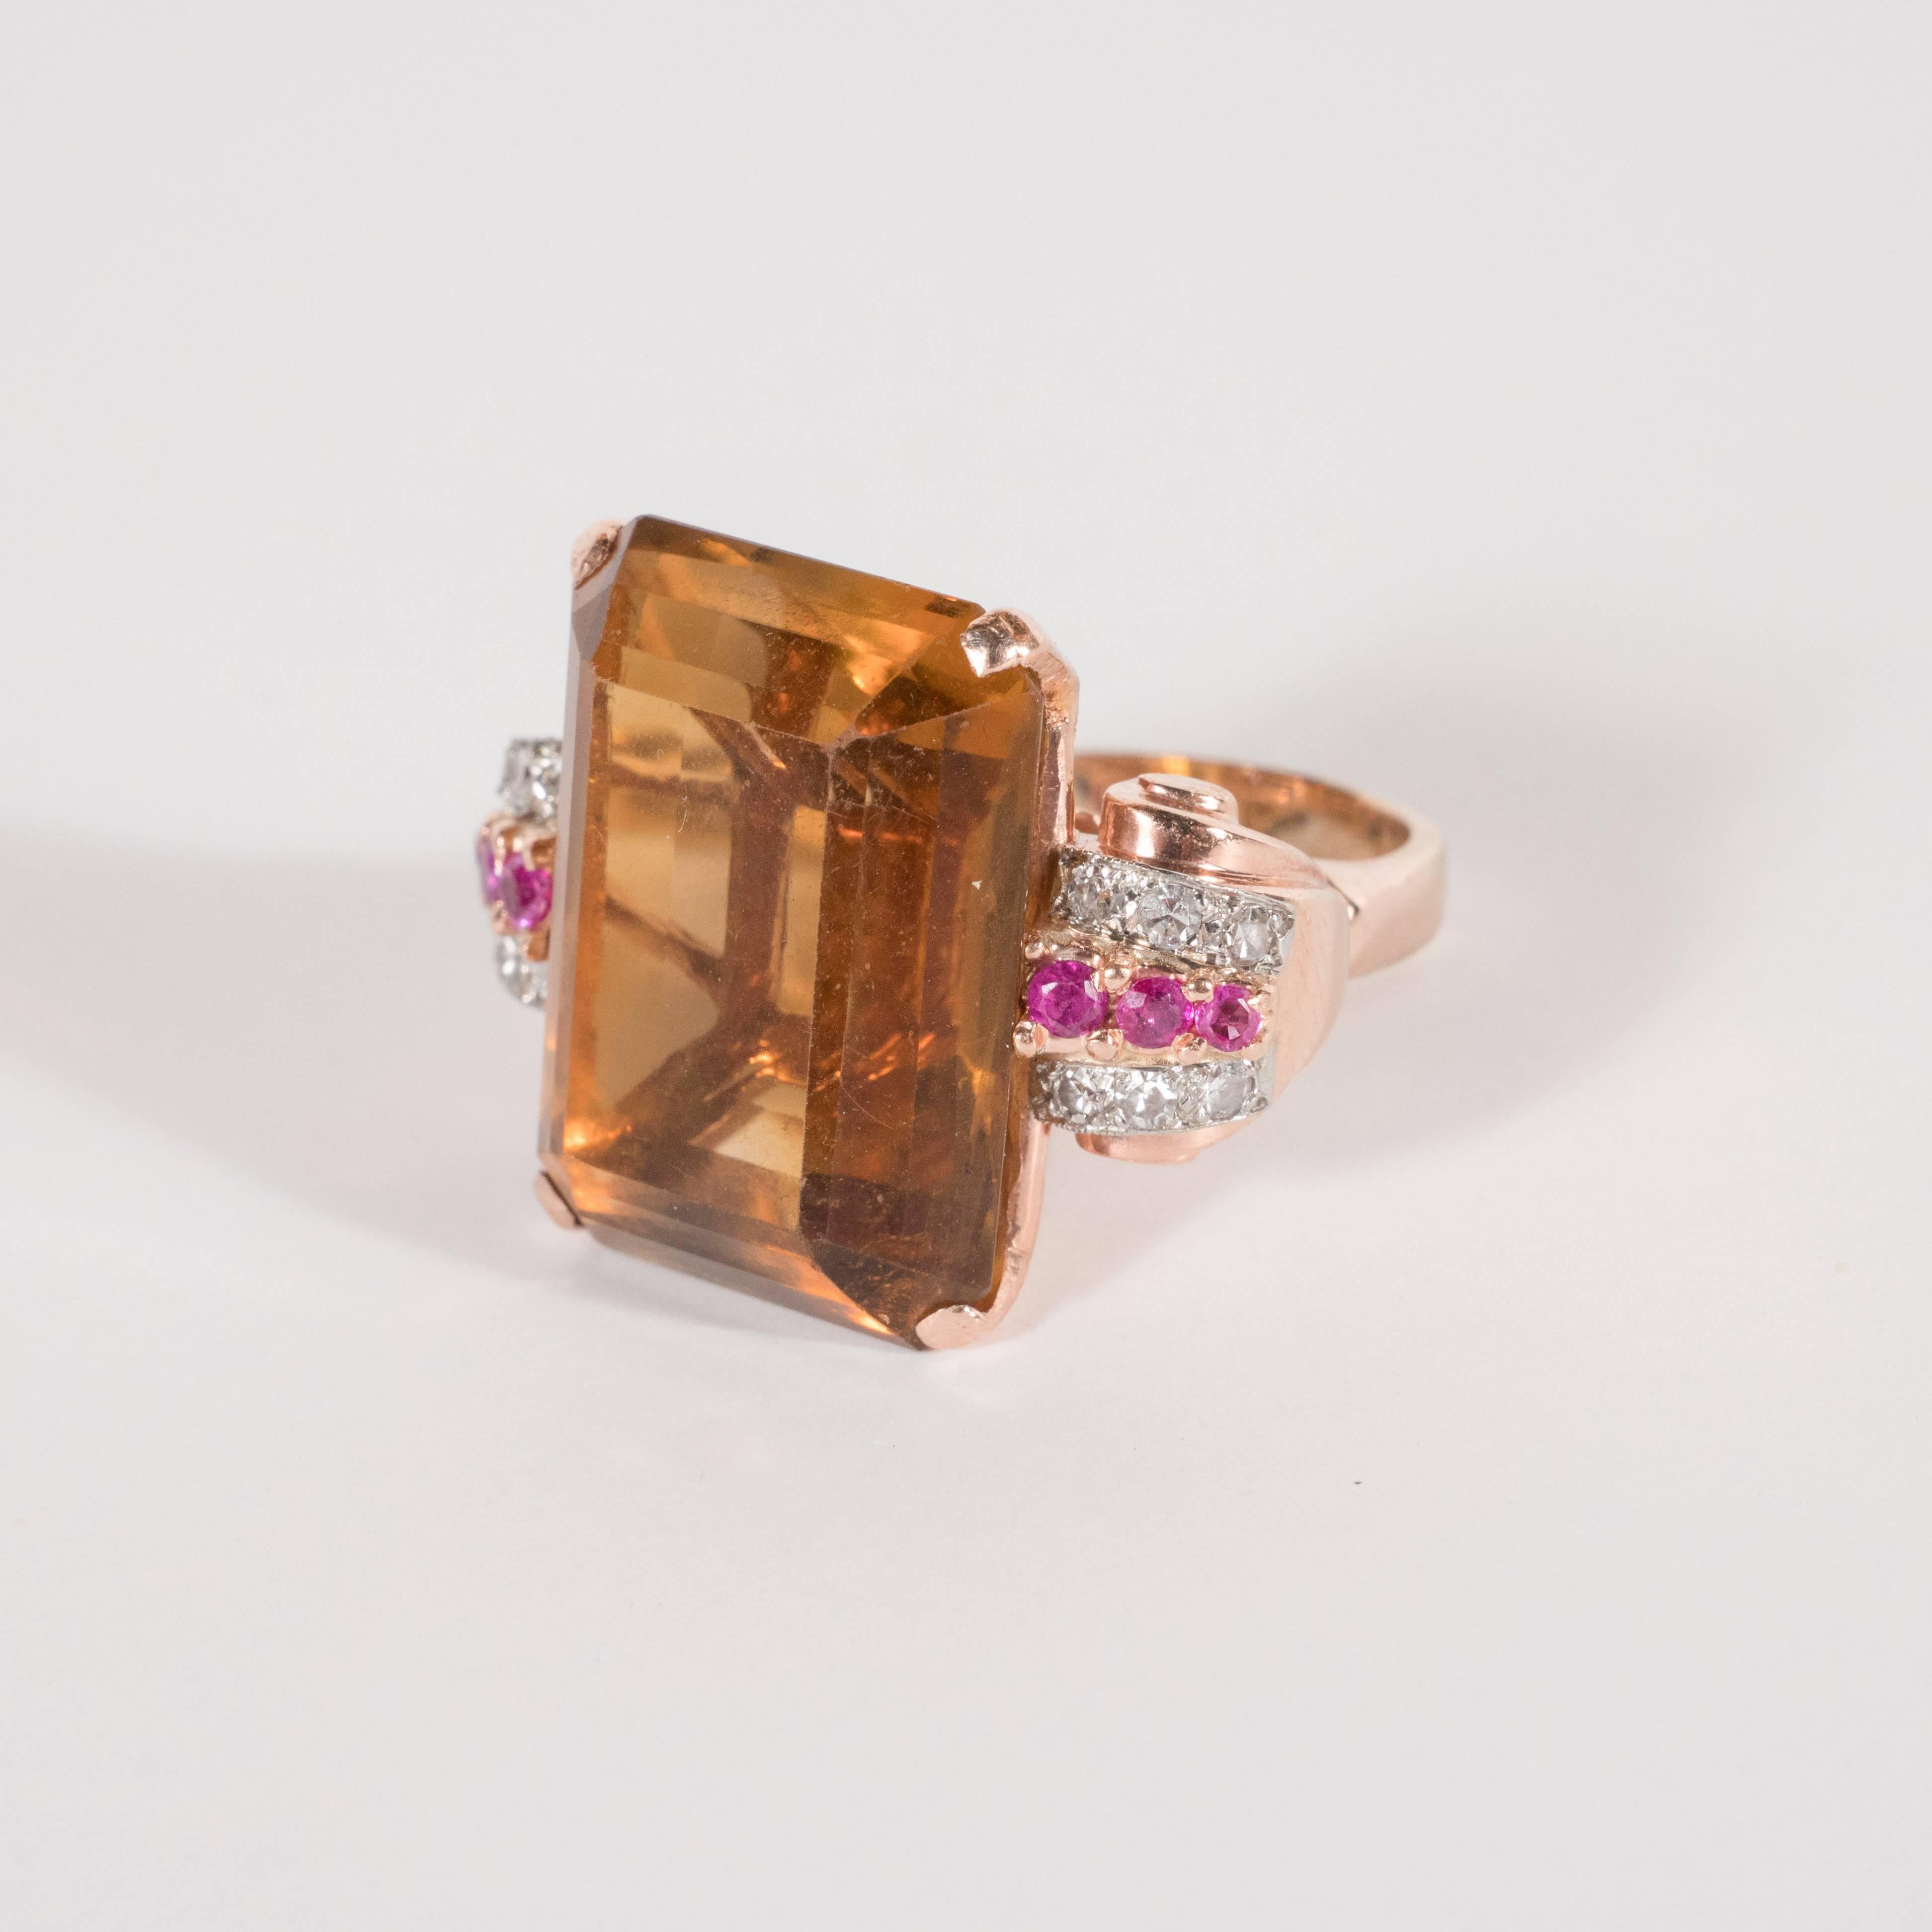 Emerald Cut Stunning Retro 14 Karat Rose Gold Topaz Ring with Diamonds and Rubies